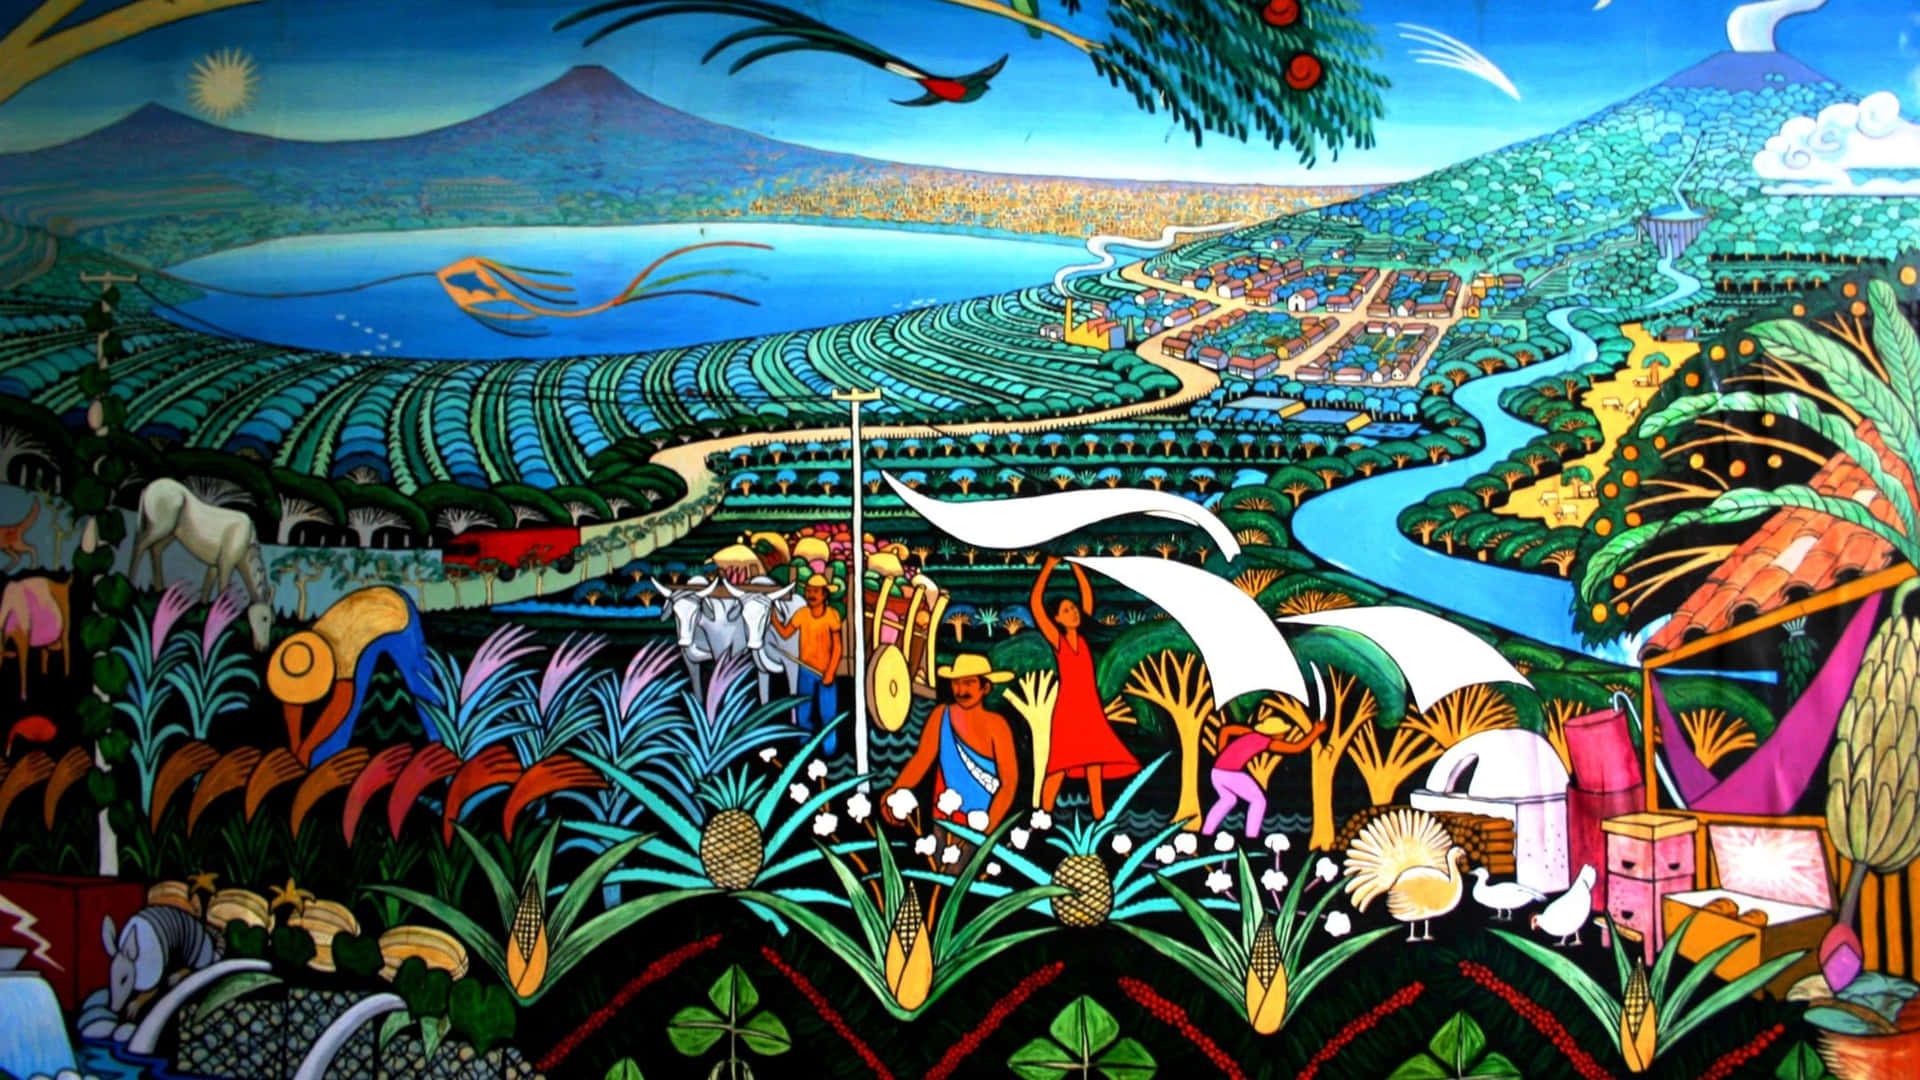 A Mural Of A Tropical Scene